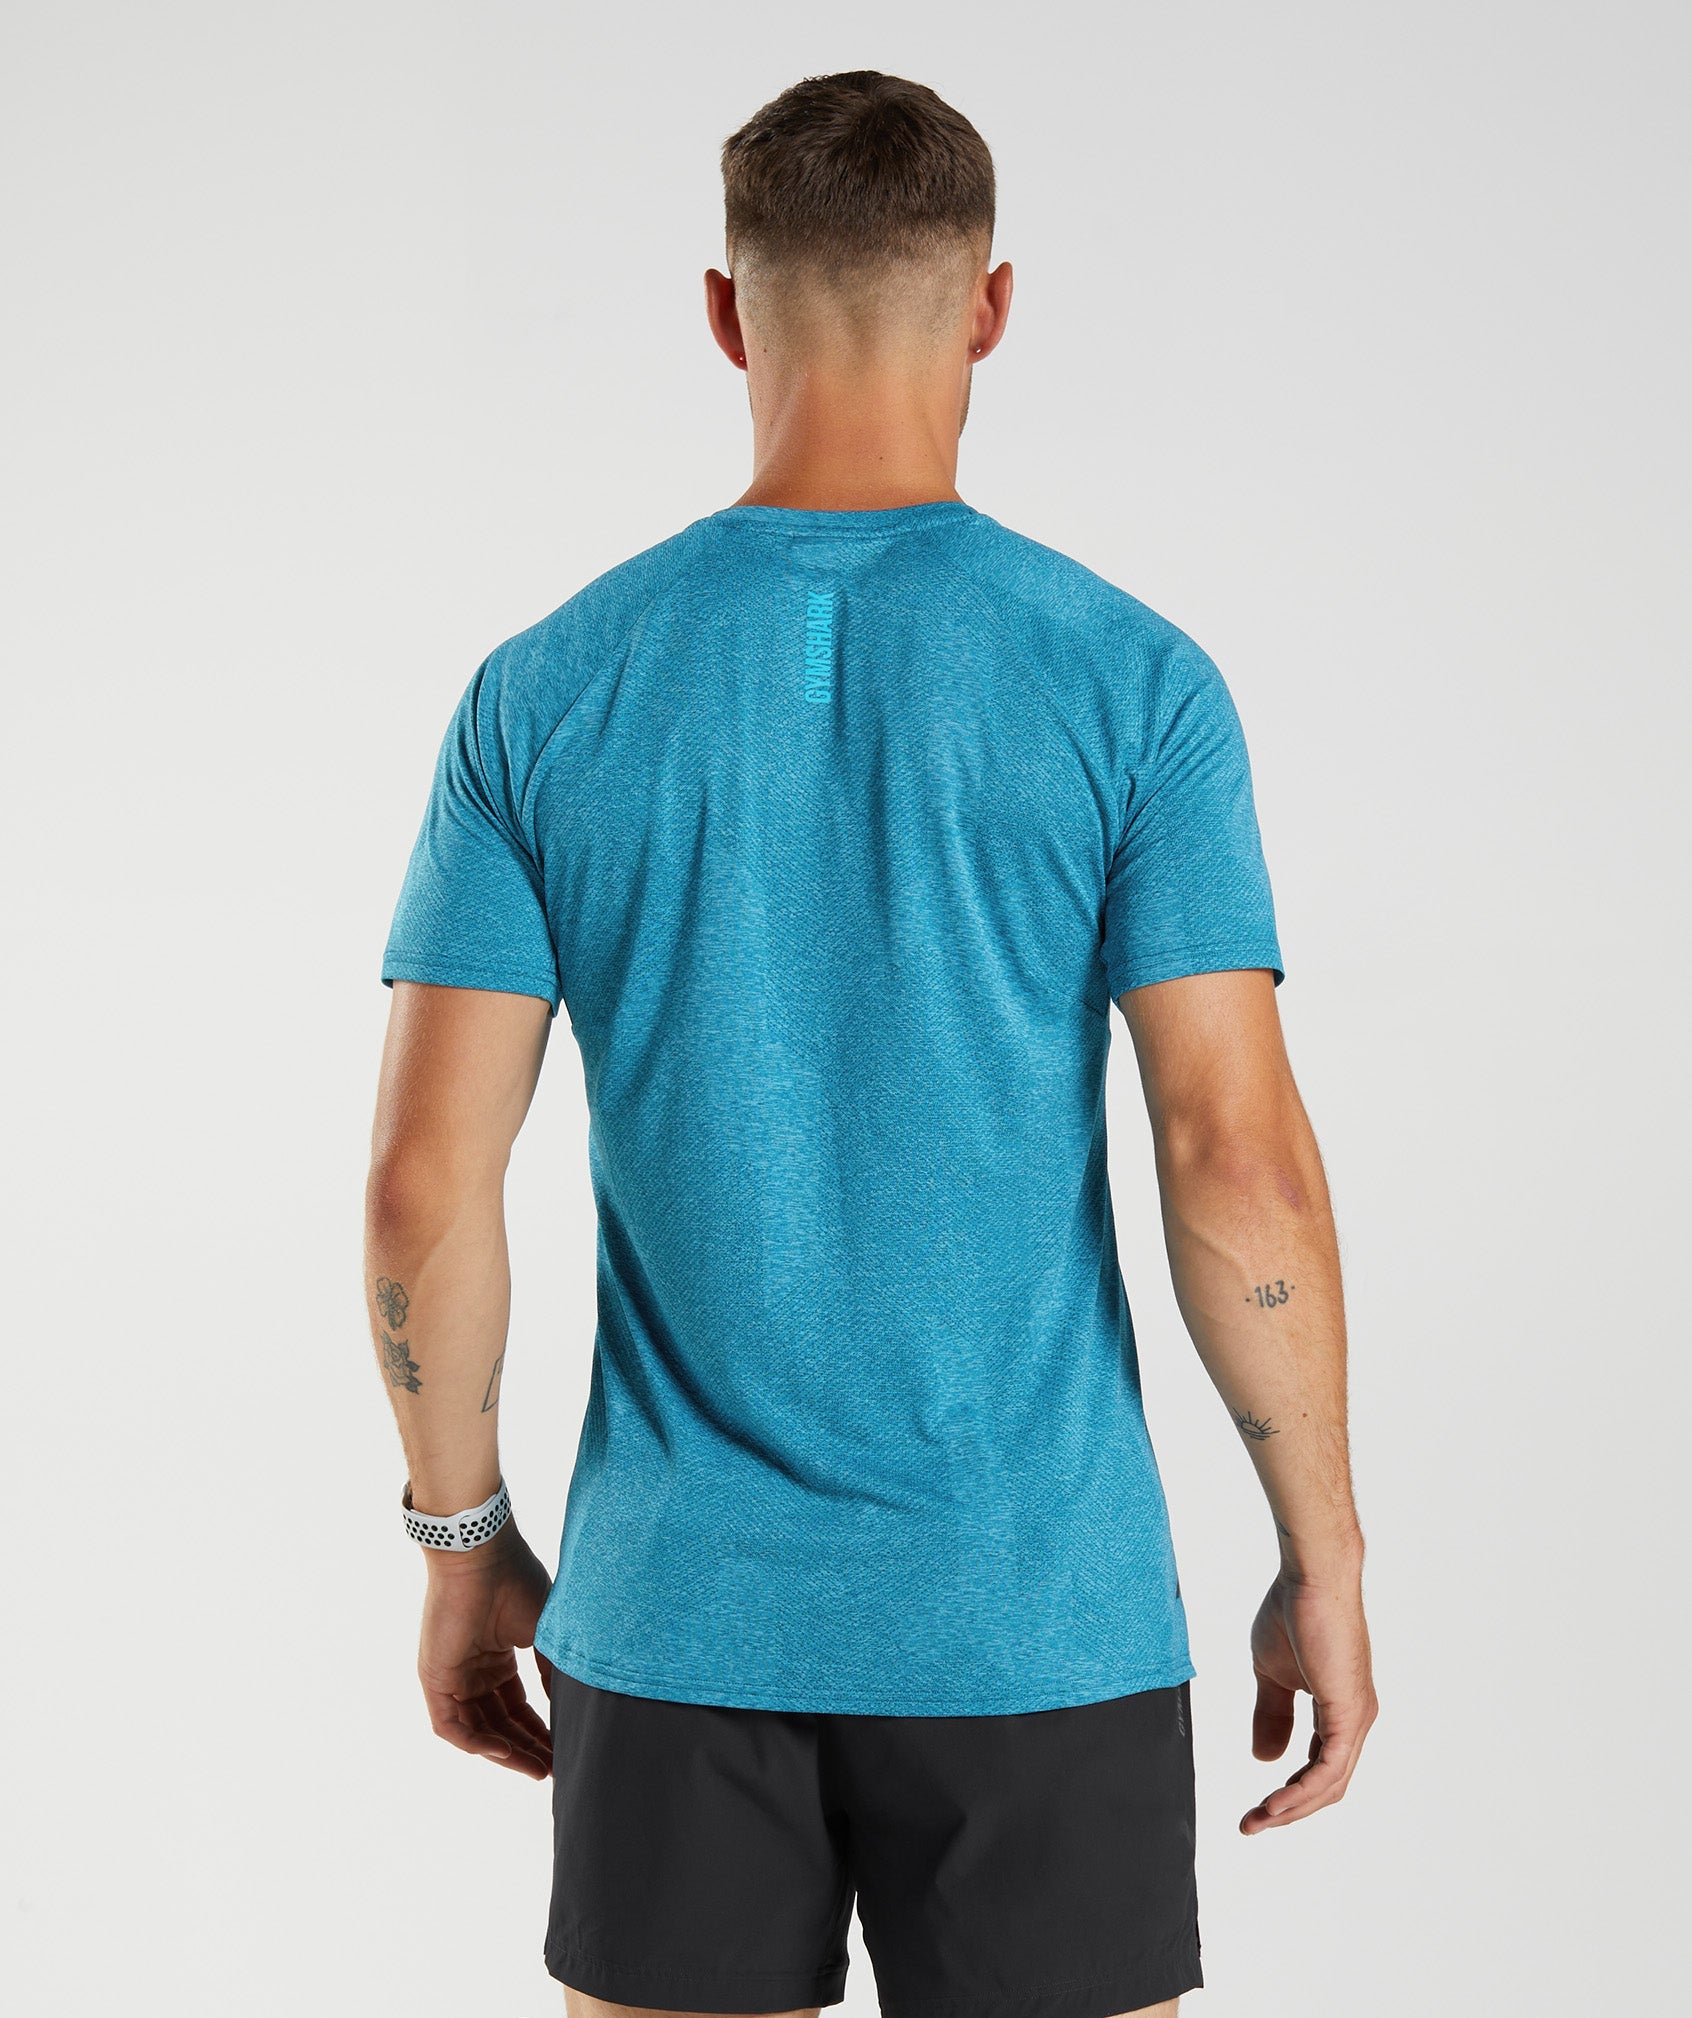 Apex T-Shirt in Atlantic Blue/Shark Blue